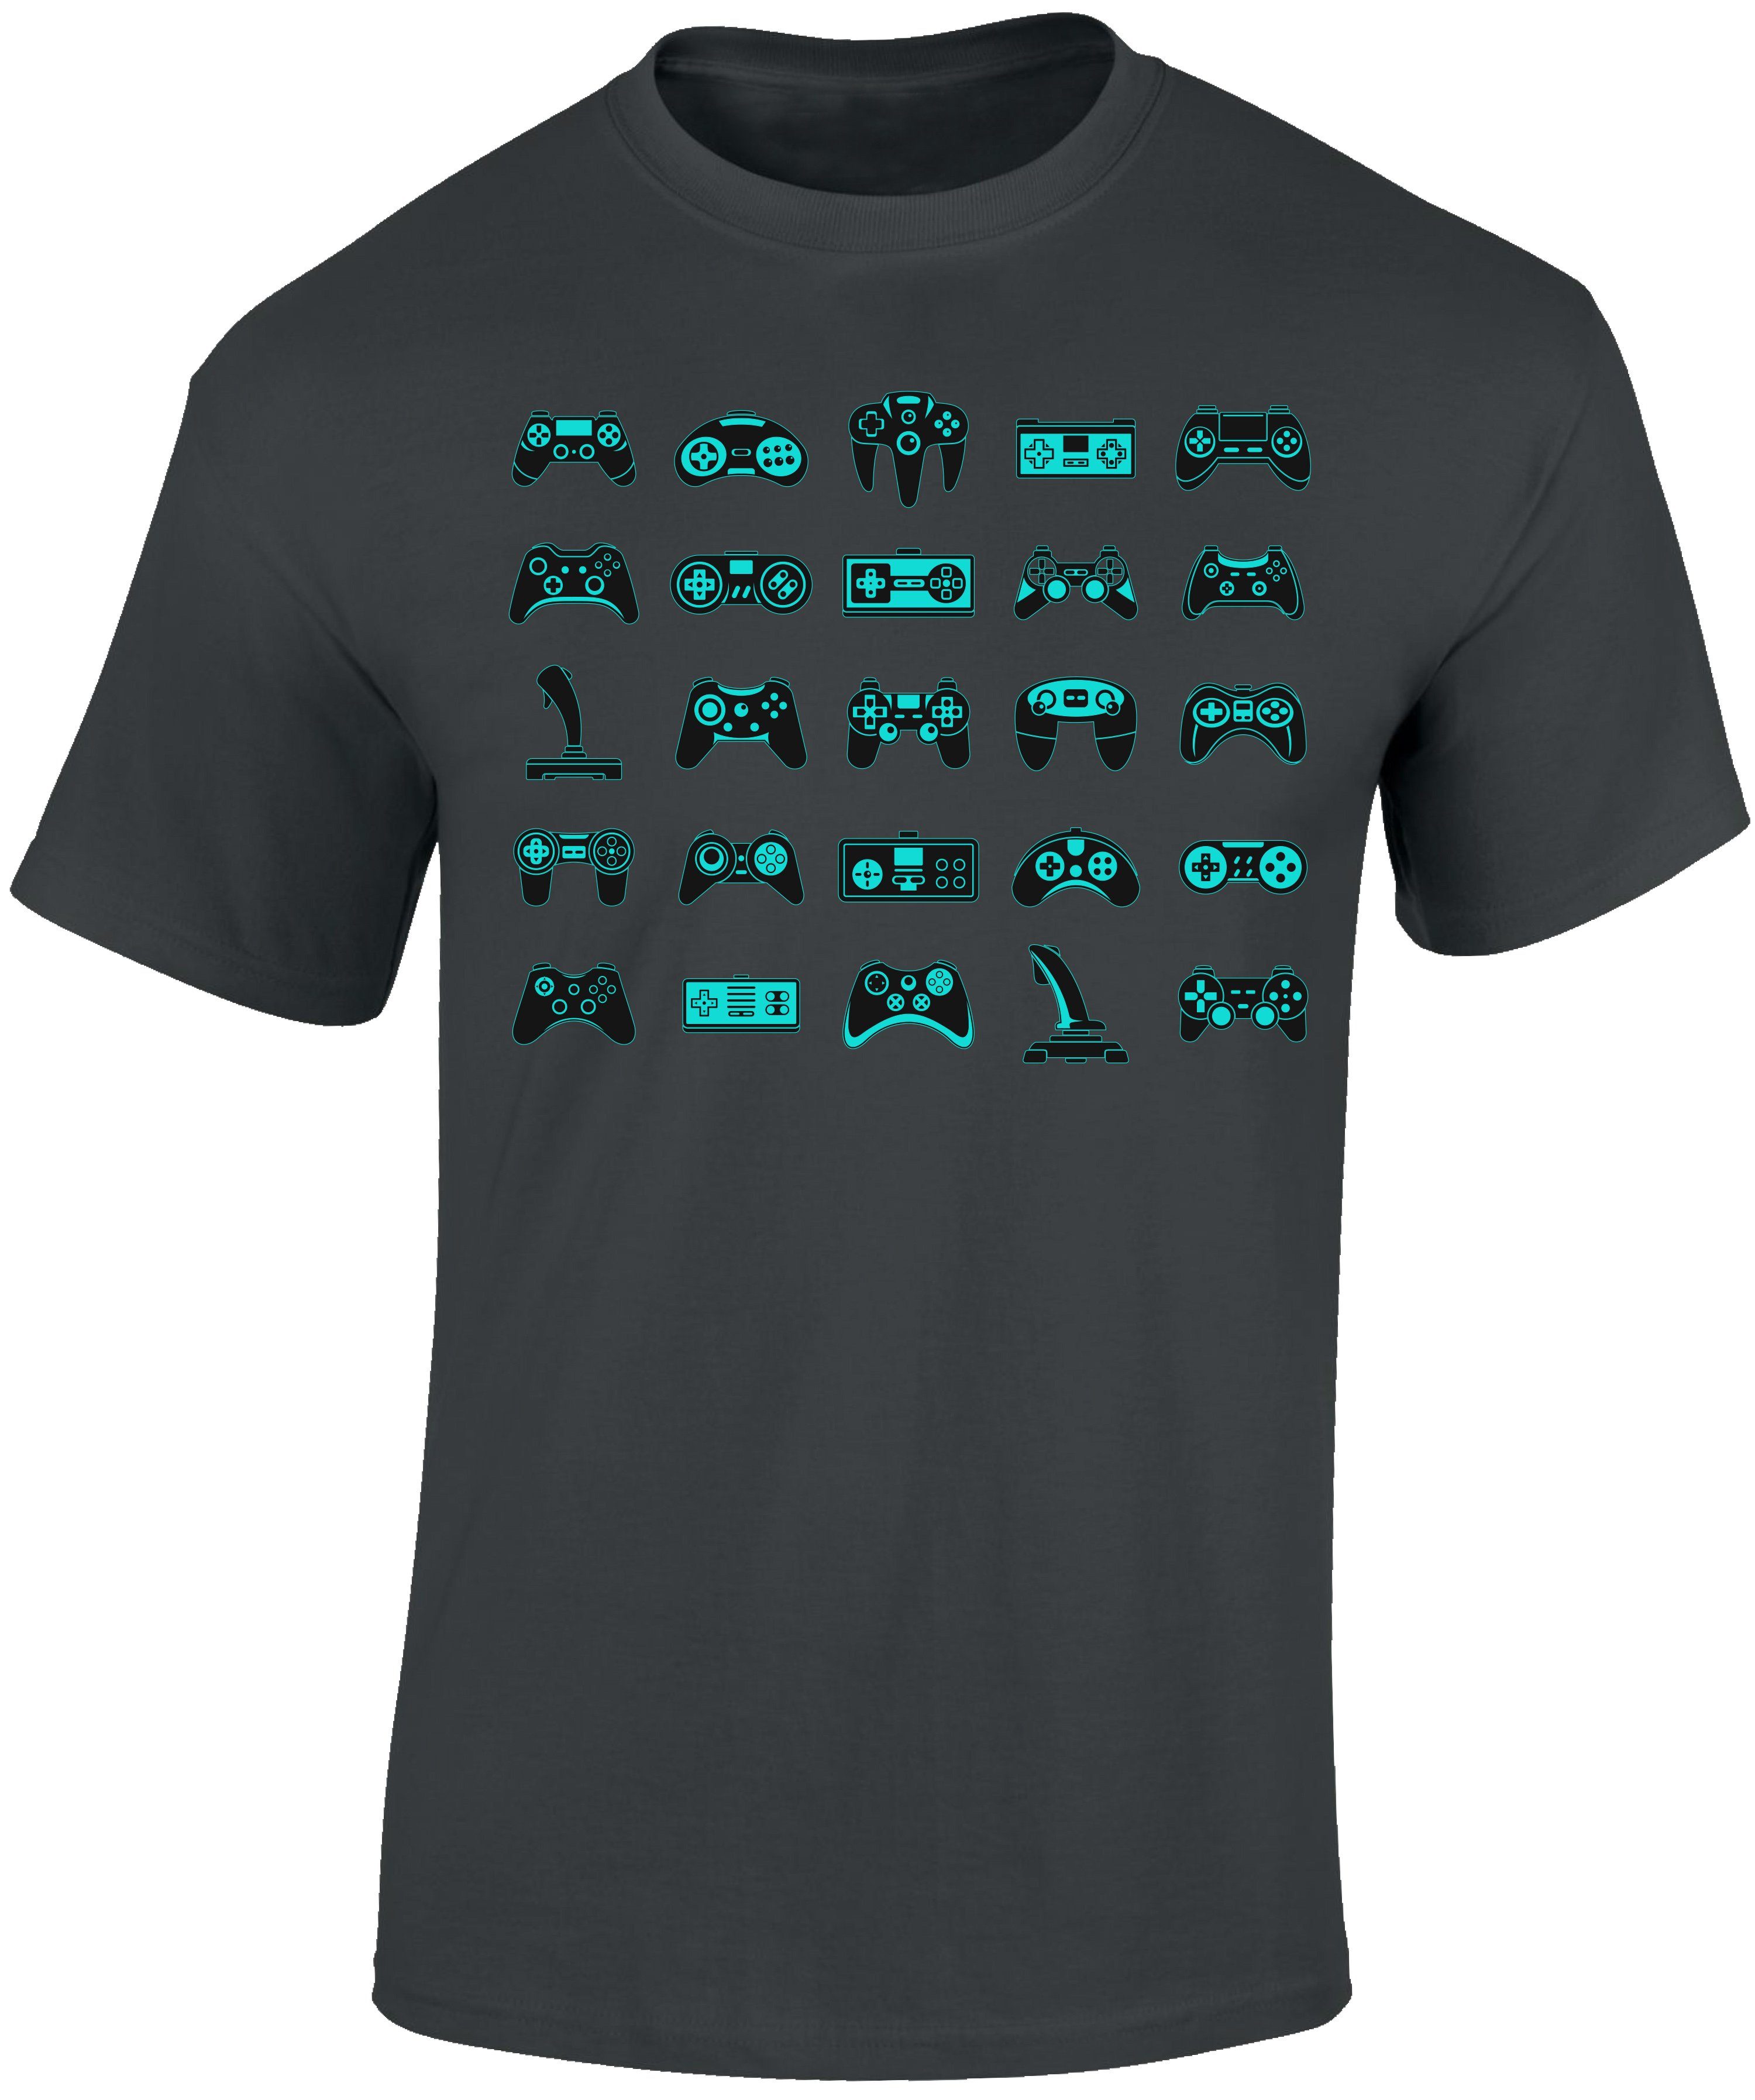 Baddery Print-Shirt Kinder Gamer T-Shirt: Controller Gaming hochwertiger  Siebdruck, aus Baumwolle